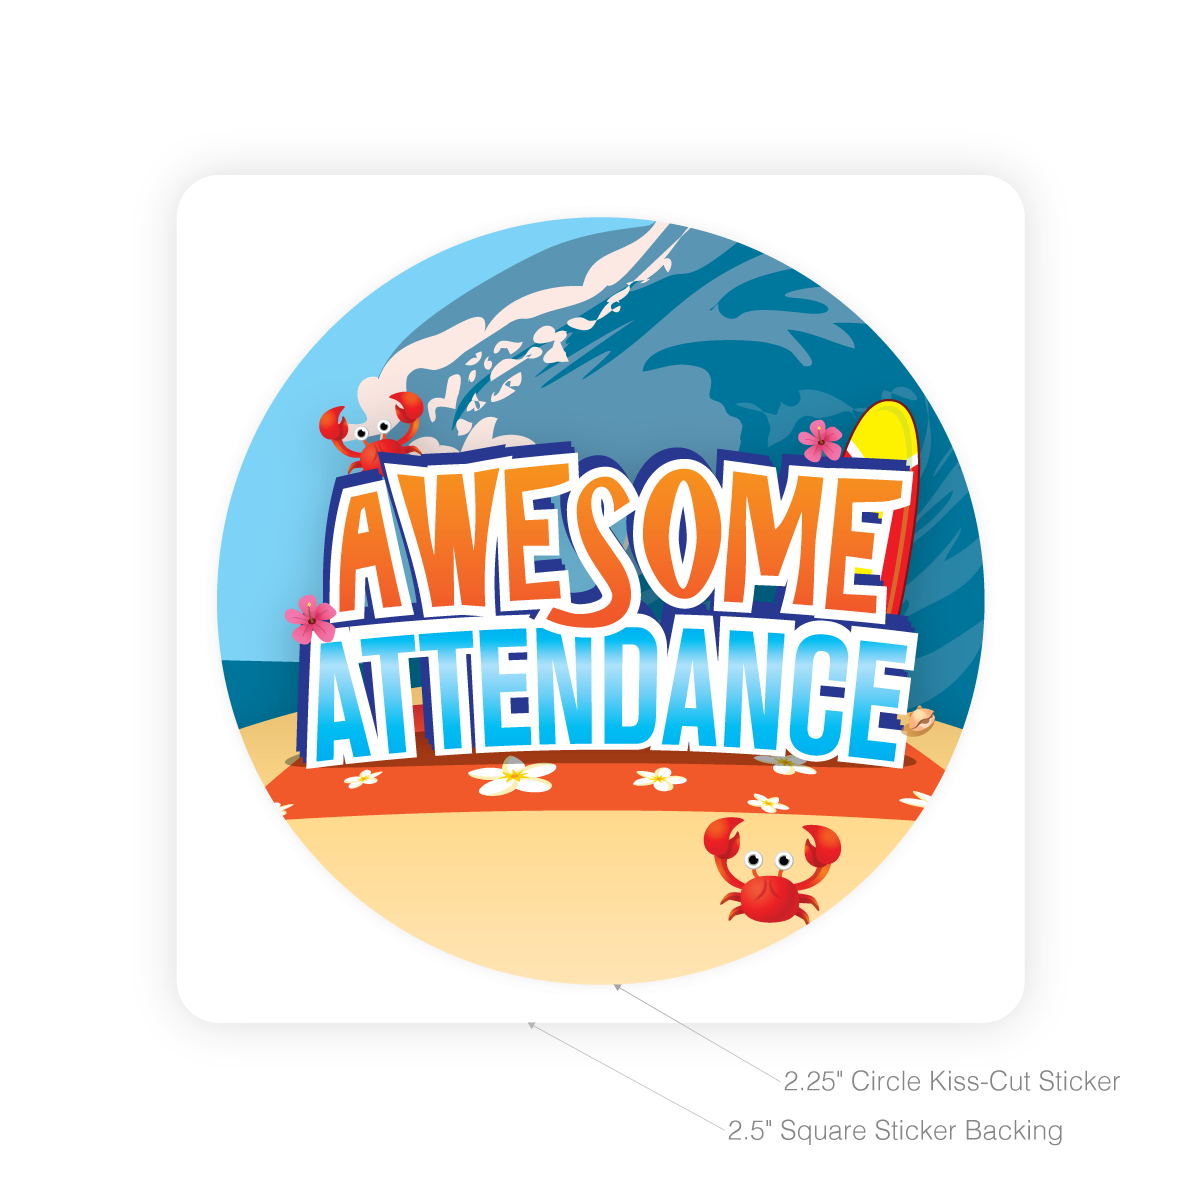 Round Sticker - Awesome Attendance